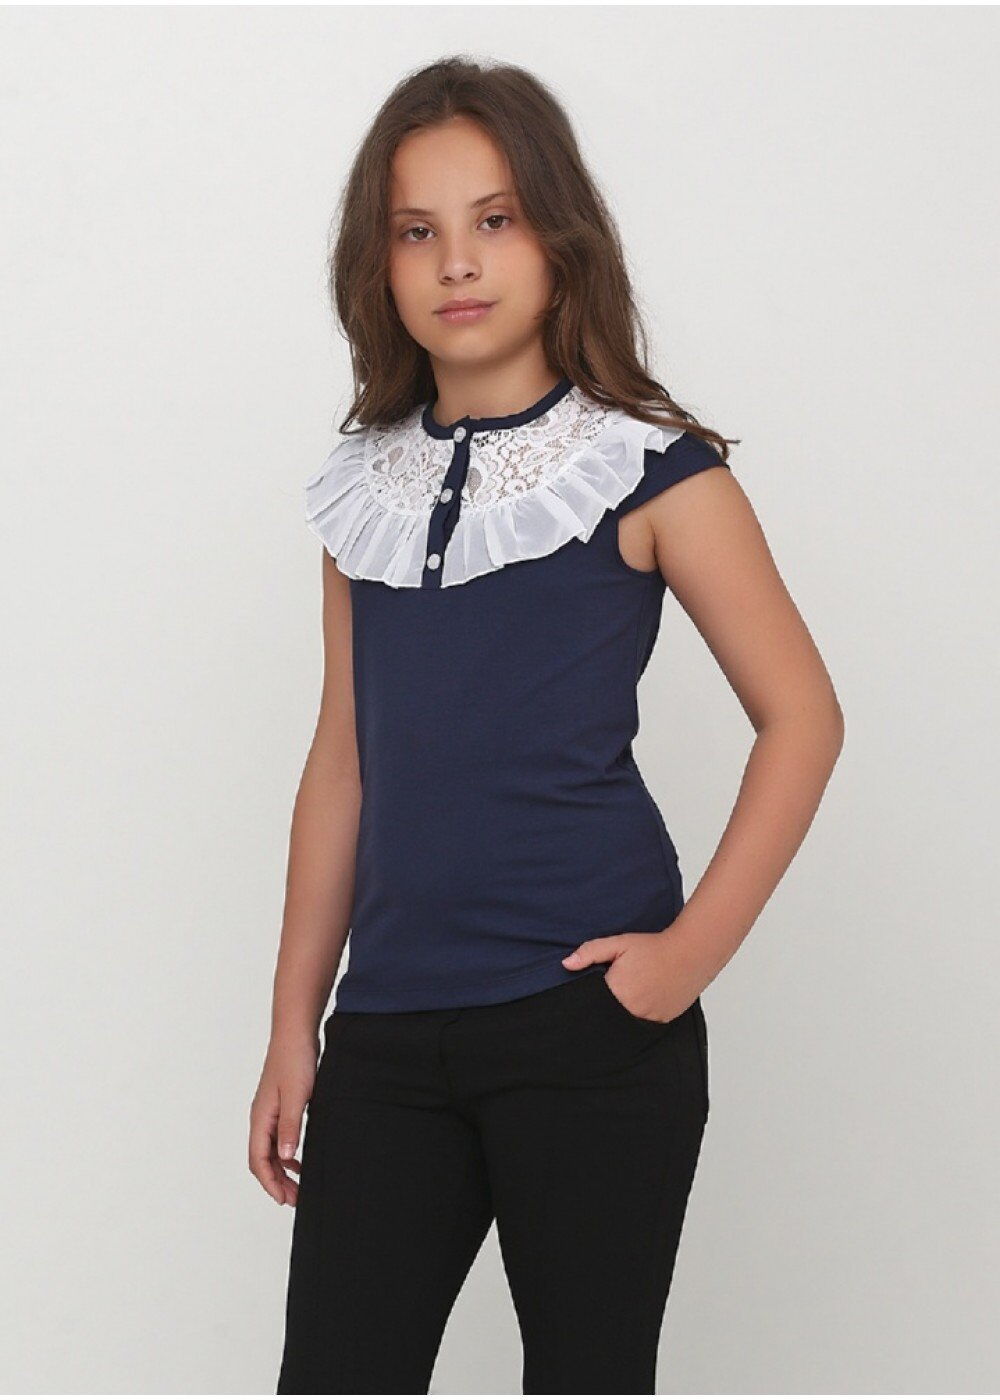 Трикотажная блузка для девочки Vidoli синяя 19598 - цена